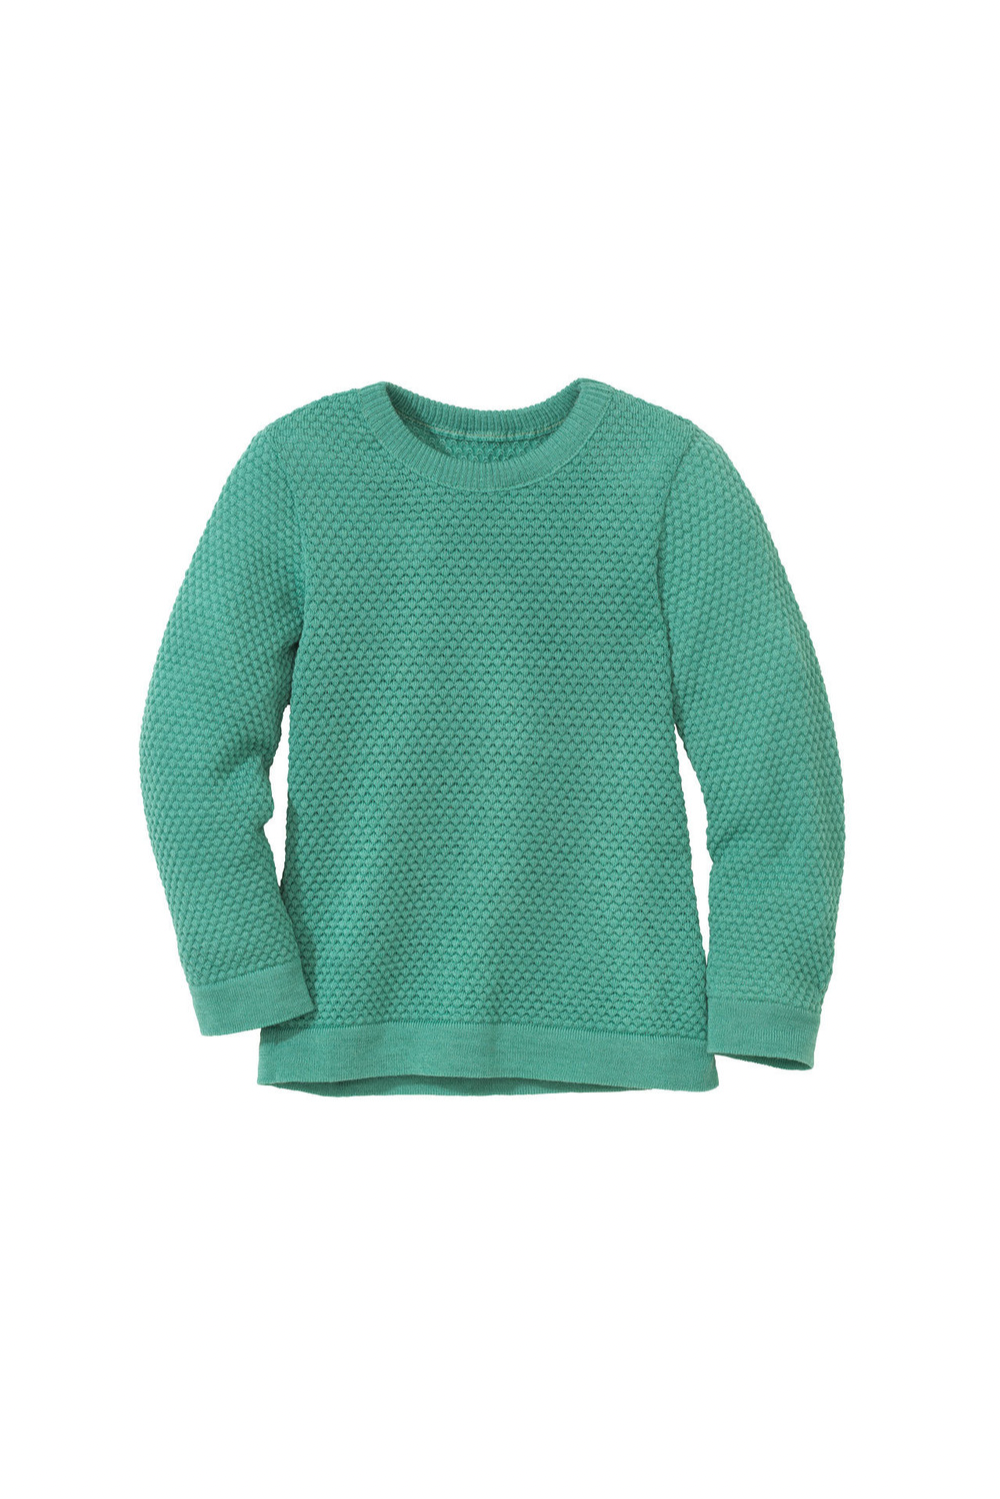 Mint Merino wool honeycomb knitted sweater 